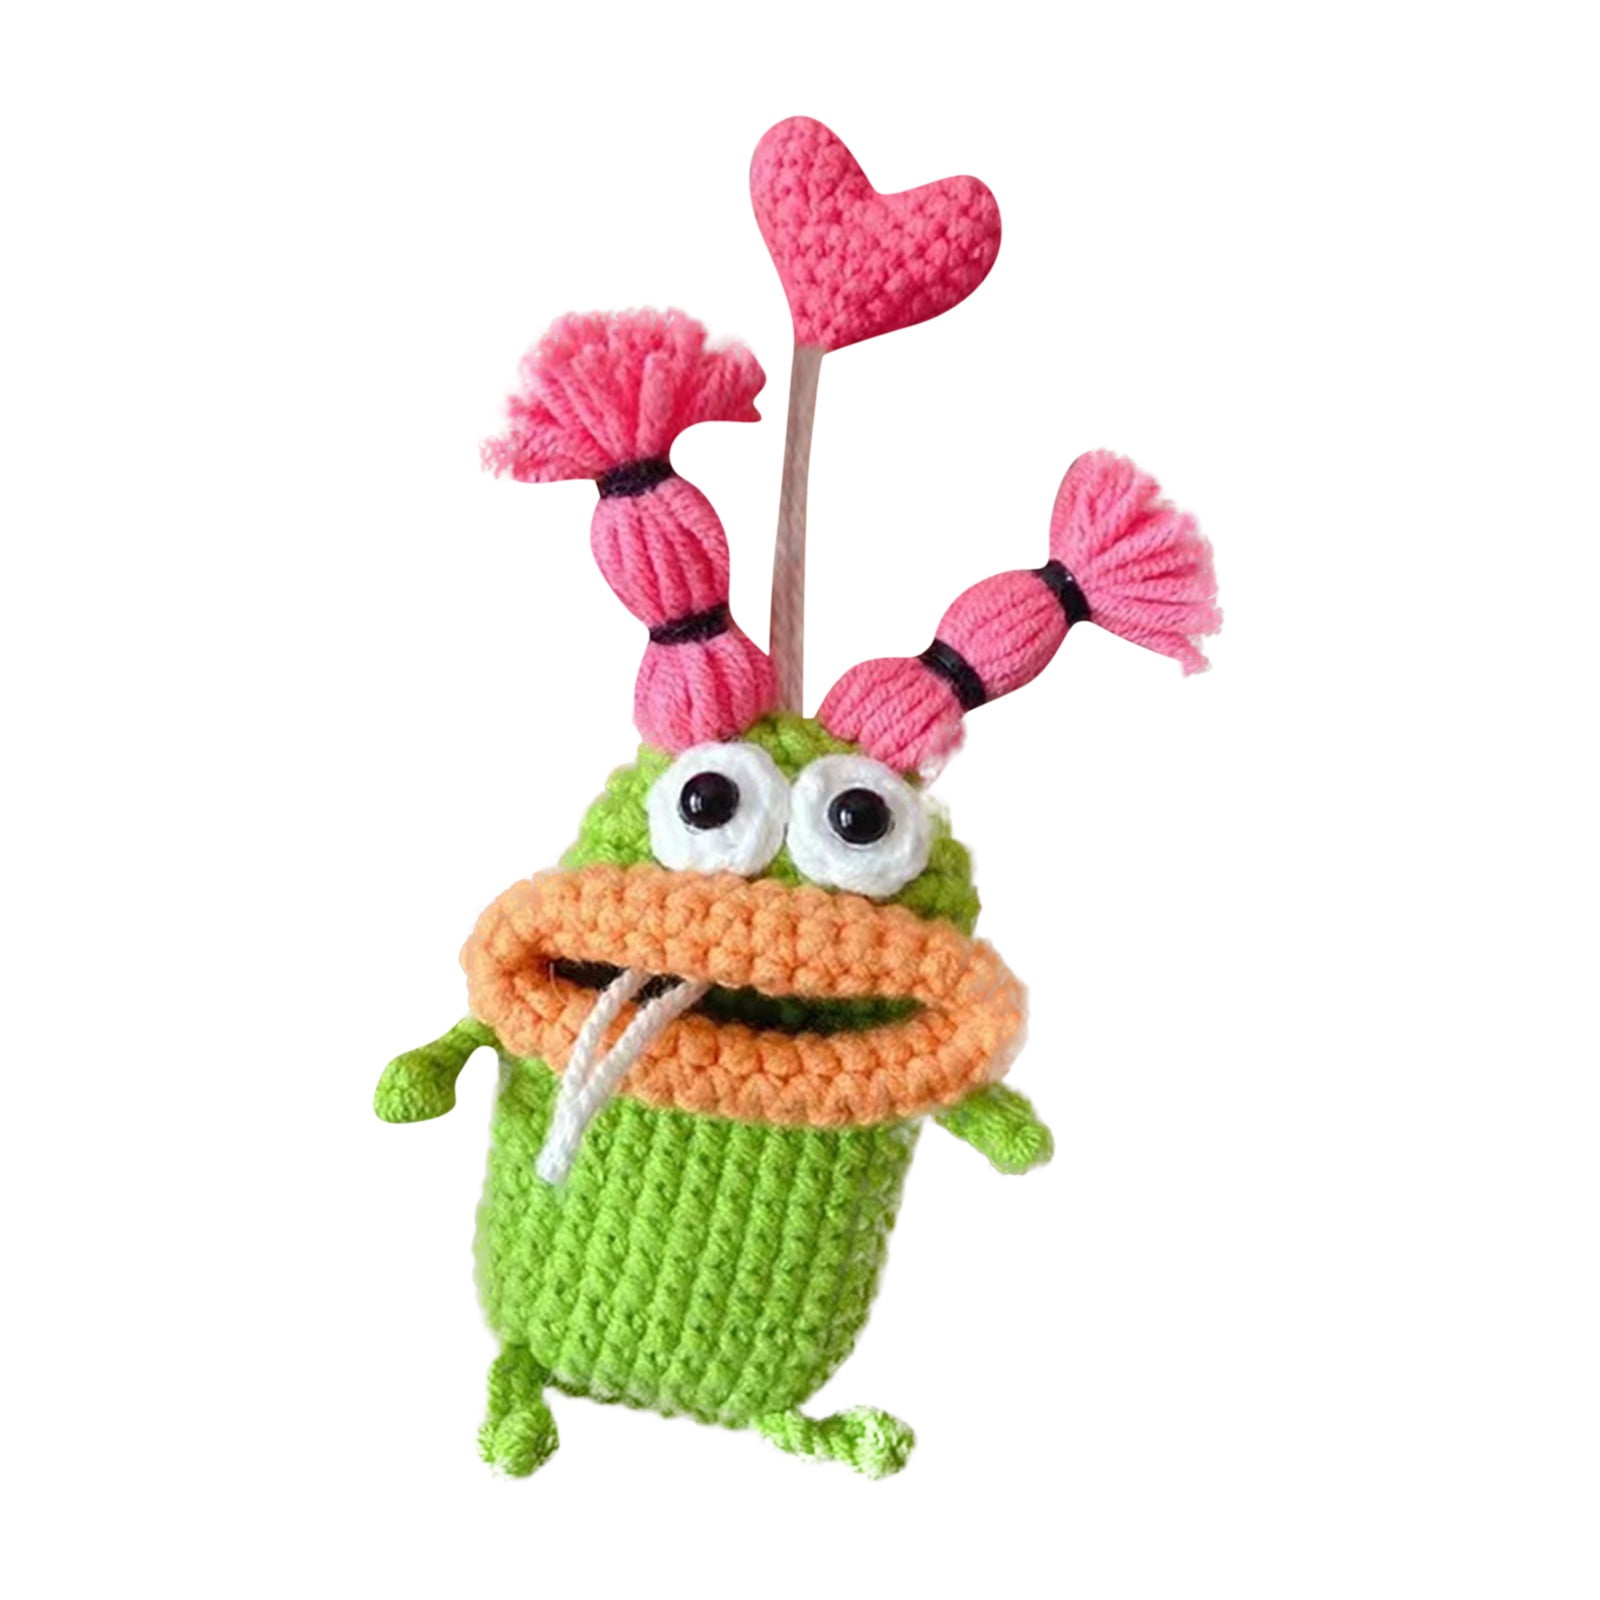 Handmade Crochet Key Case/Holder, Novelty Crochet Sausage Mouth Car Key Case,  Cute Hand Knitting Yarn Crochet Key Cover A 